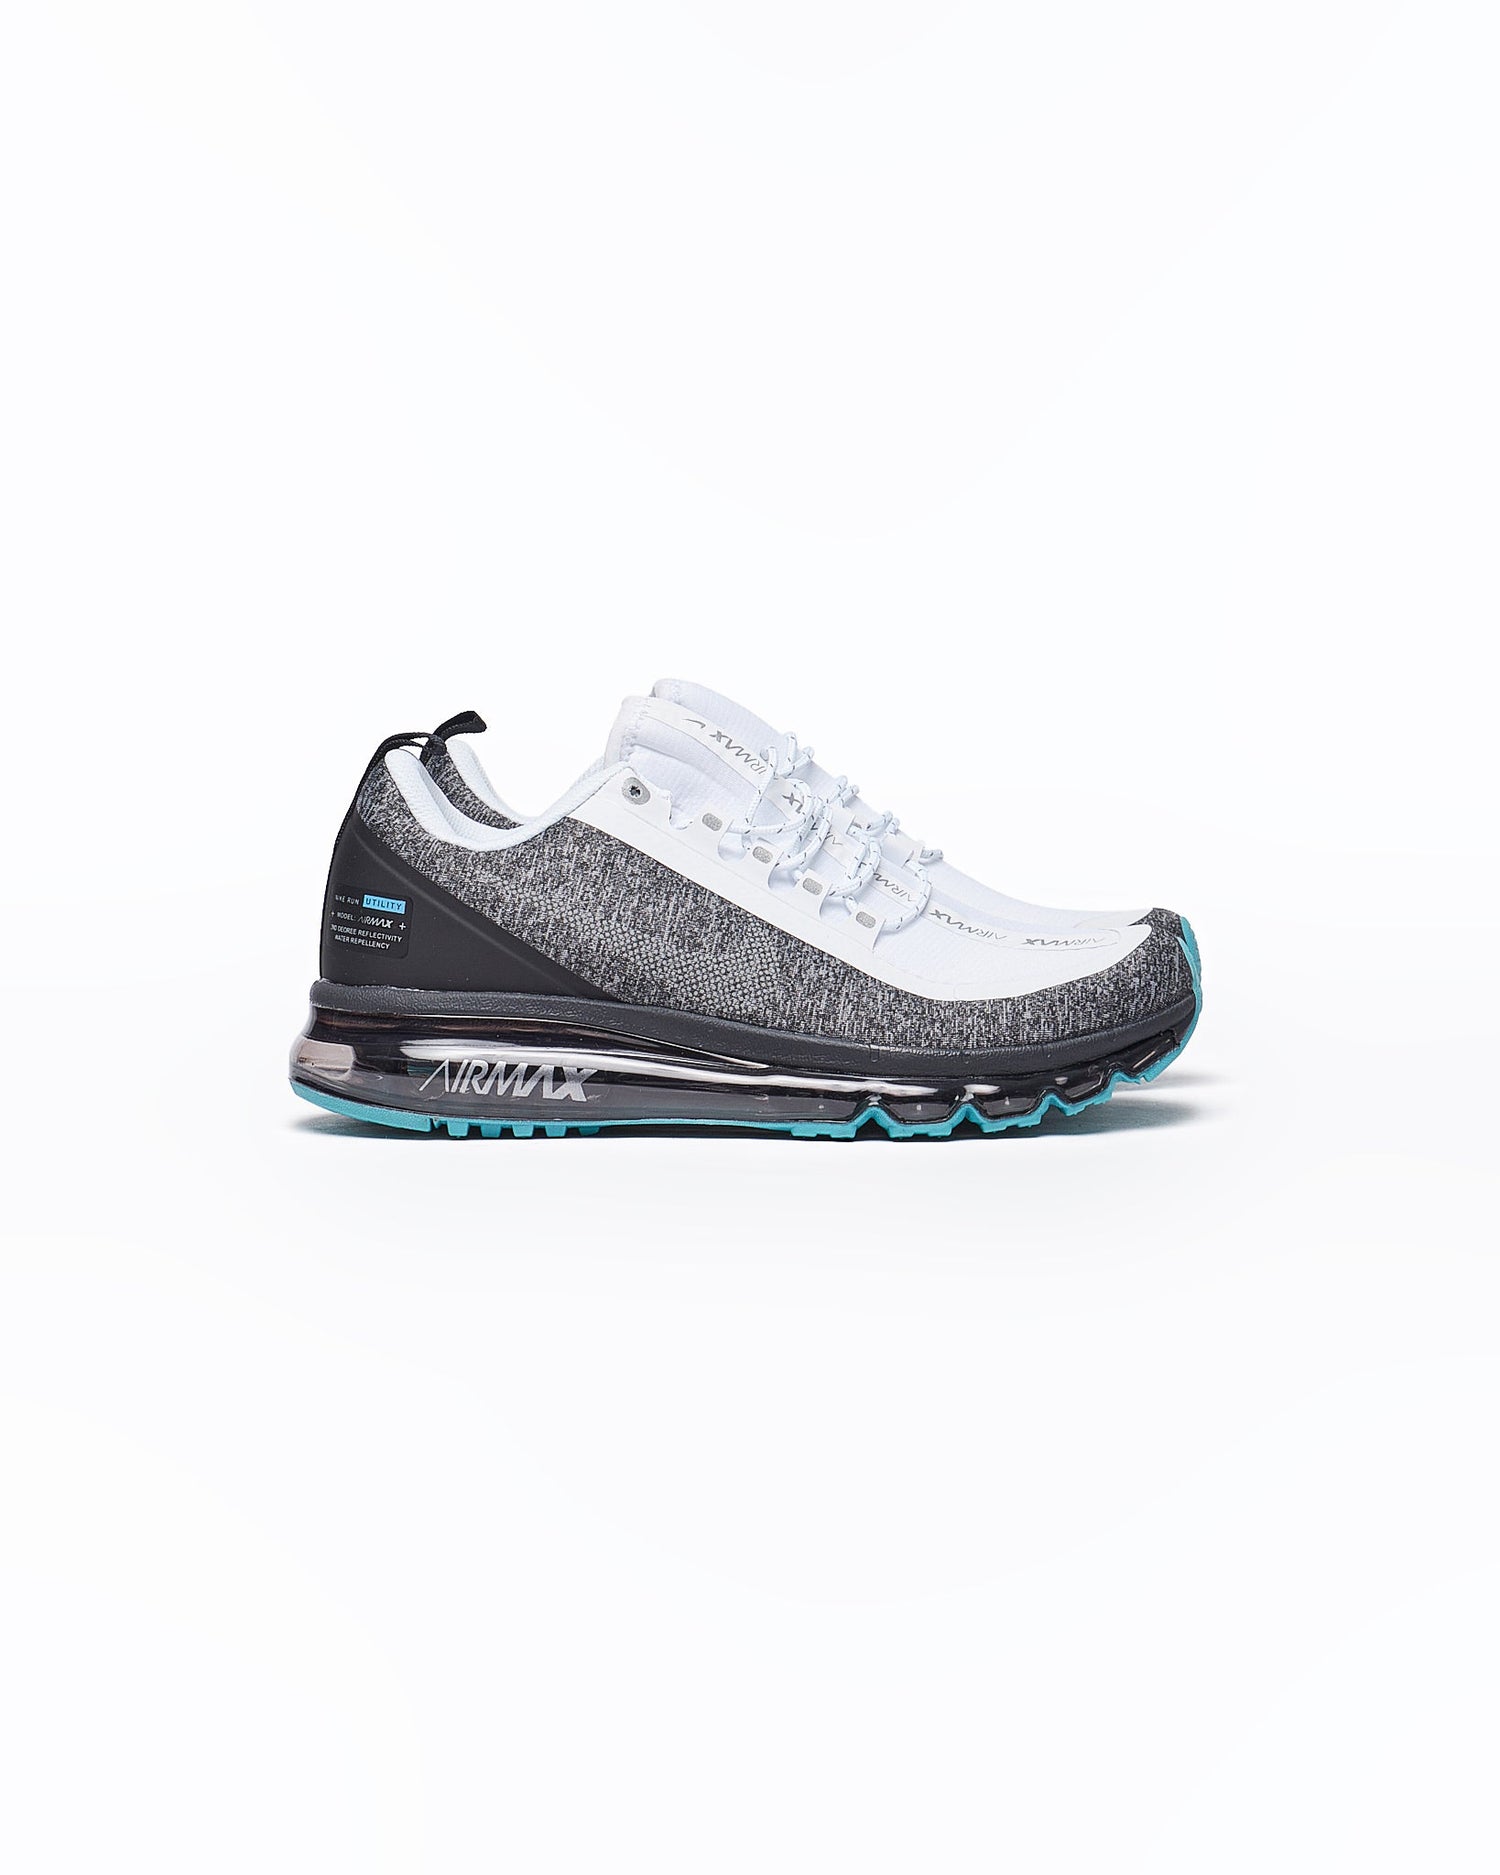 MOI OUTFIT-NIK Air Max Men Grey Runners Shoes 39.90